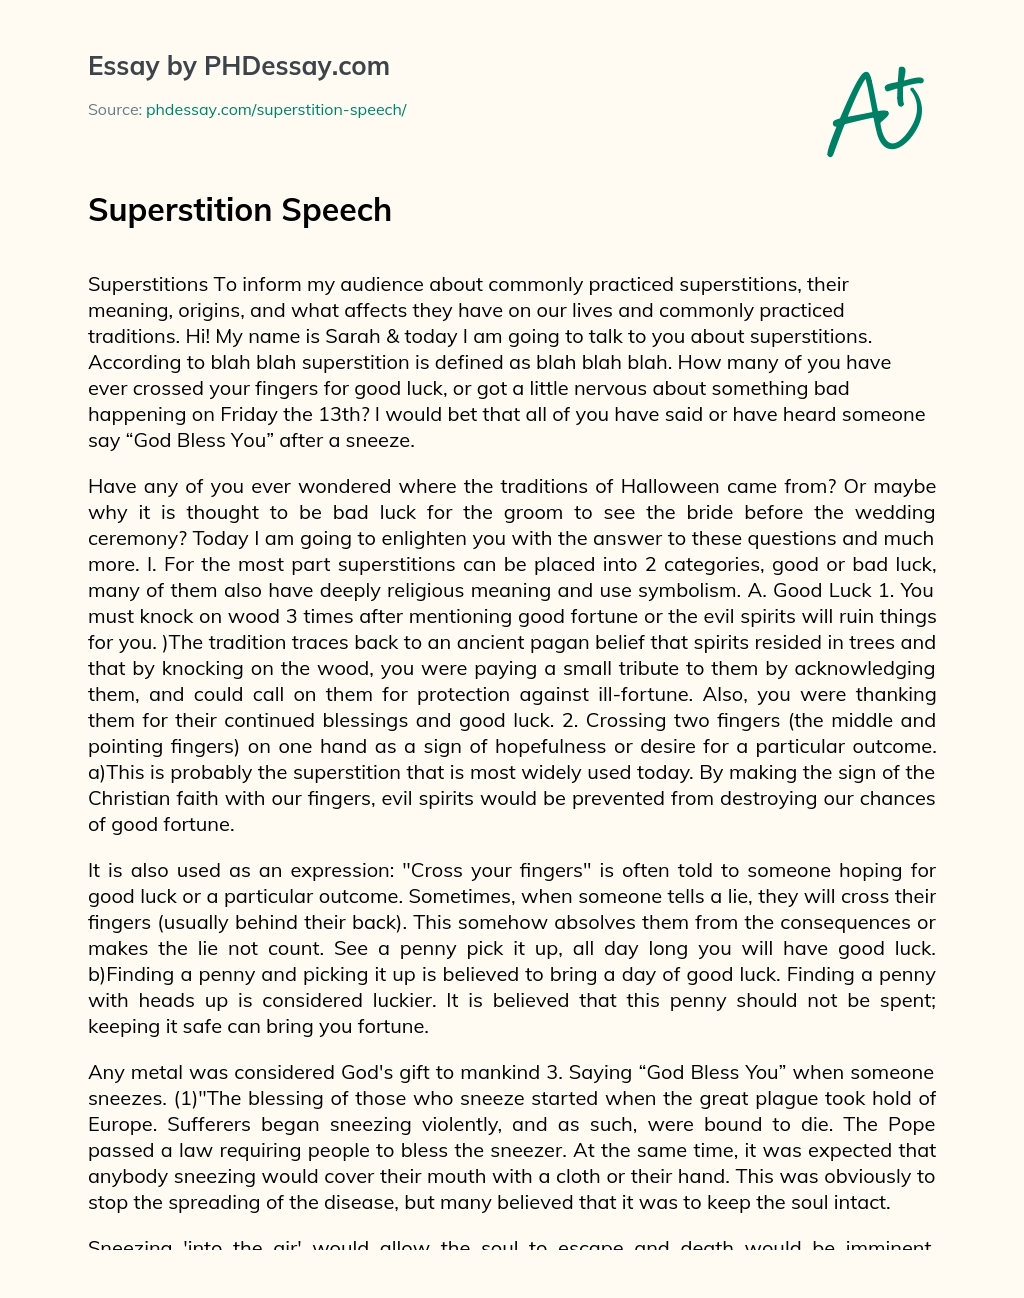 Superstition Speech essay